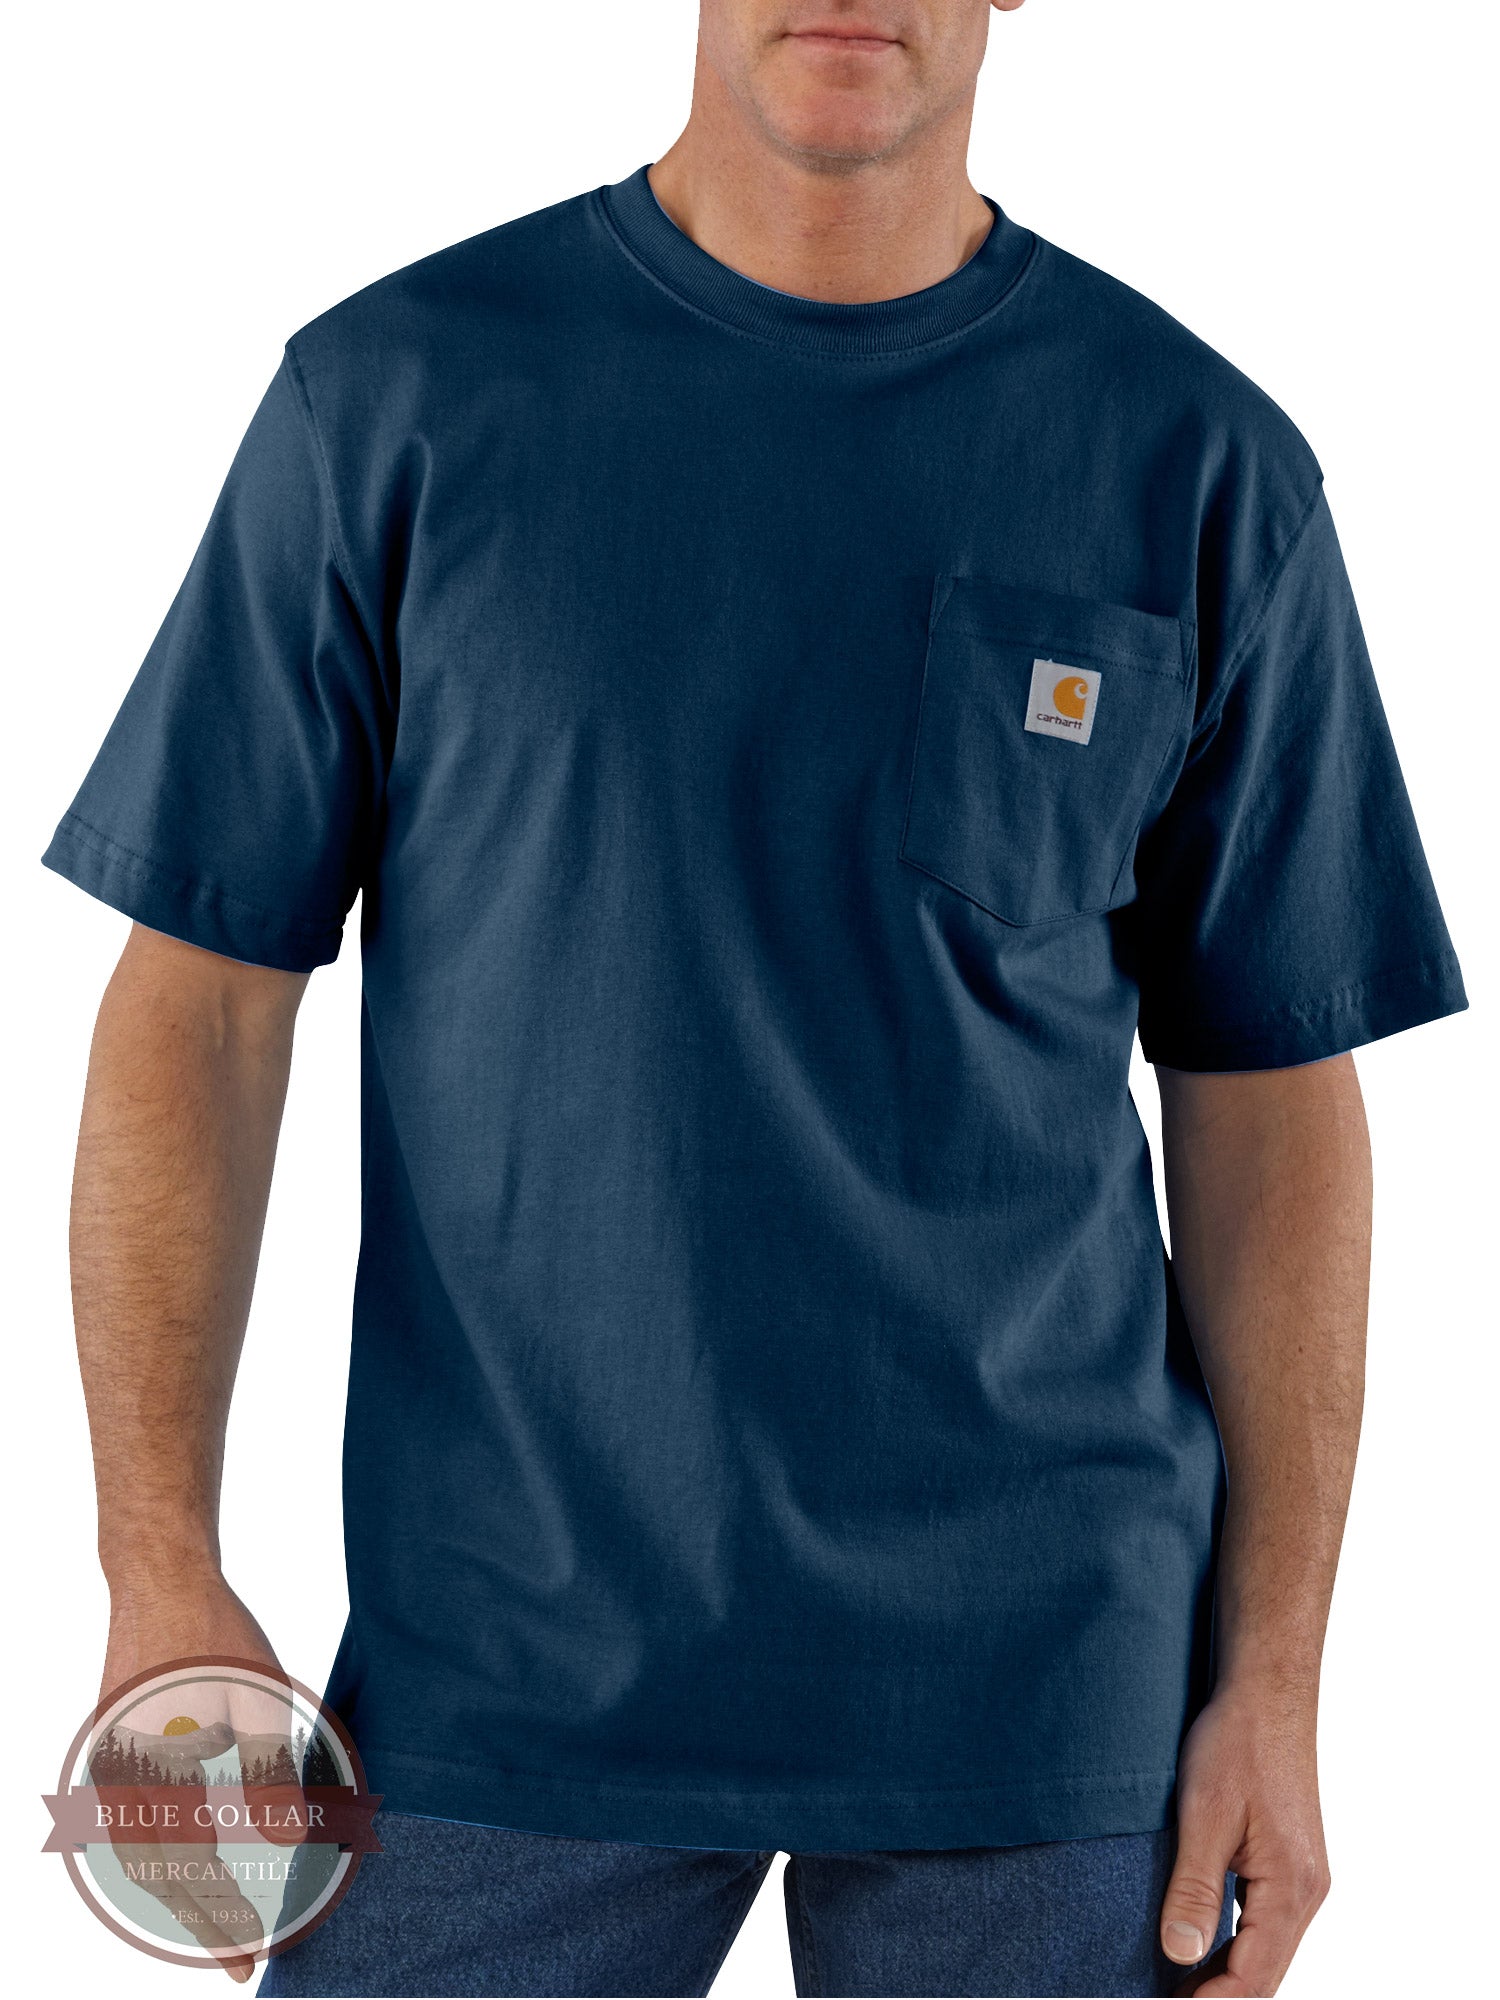 Carhartt K87 Loose Fit Heavyweight Short Sleeve Pocket T-Shirt Basic Colors navy blue